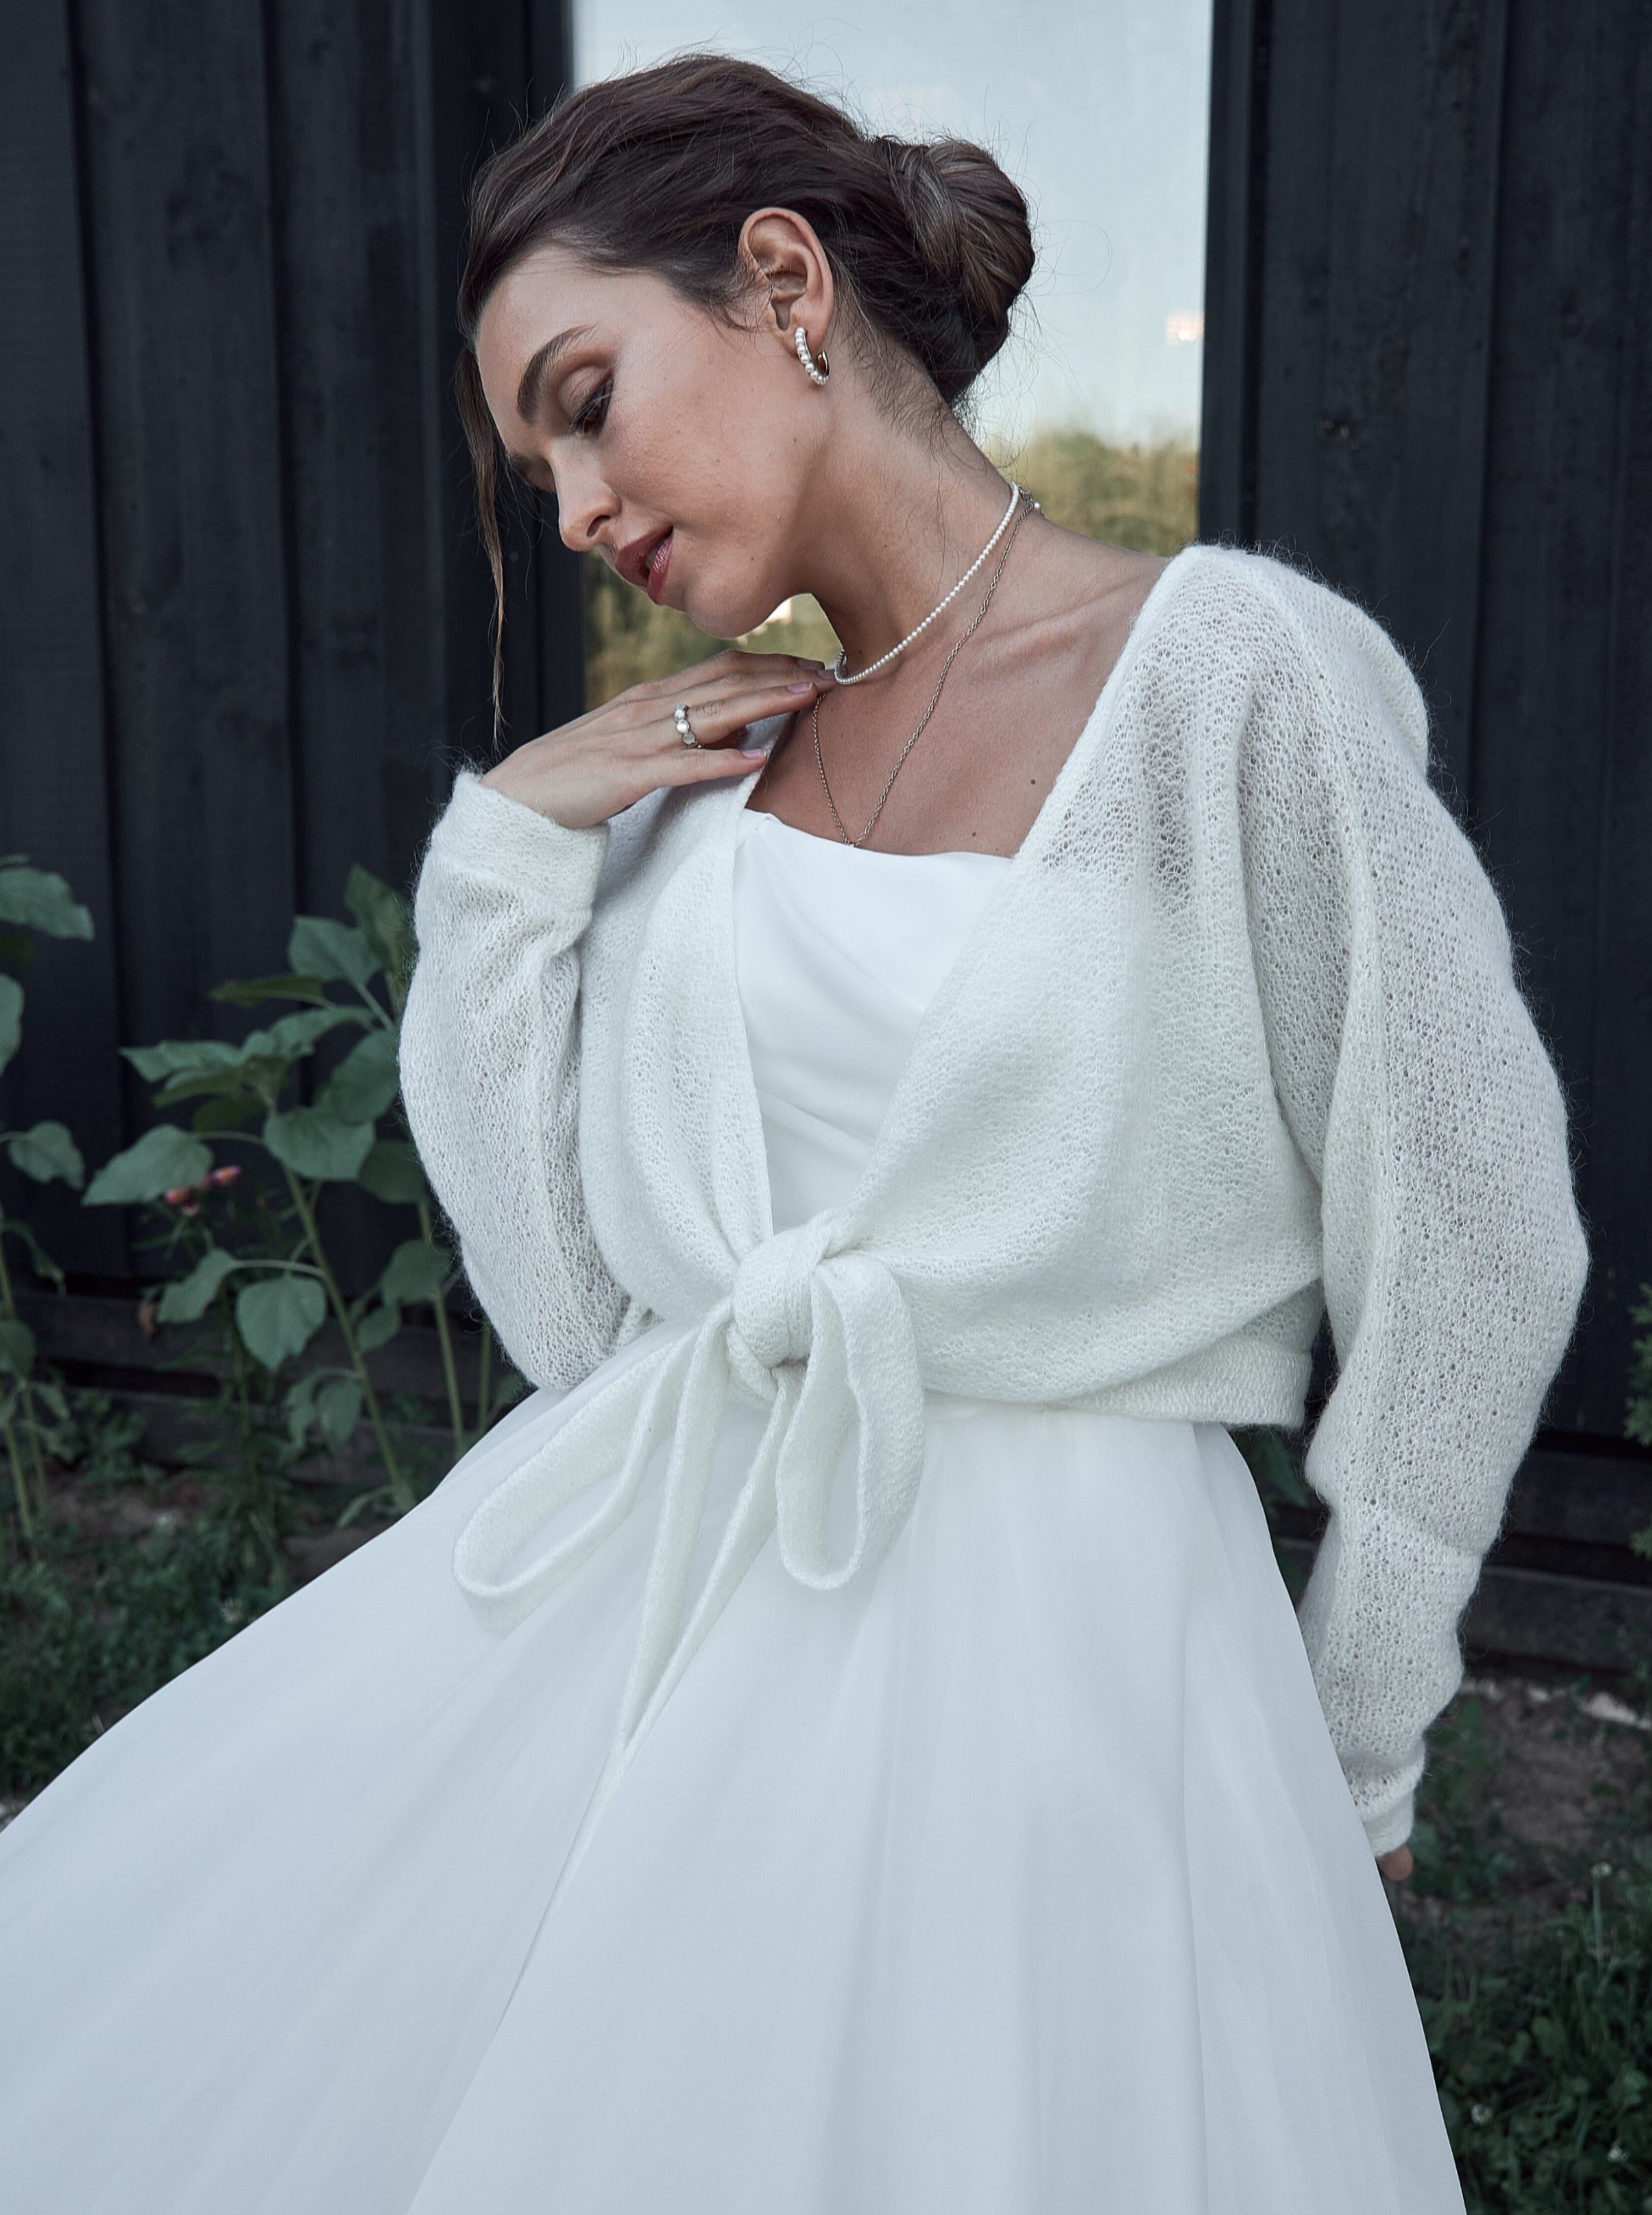 Bridal cardigan for wedding dress. Wool wedding sweater with ties